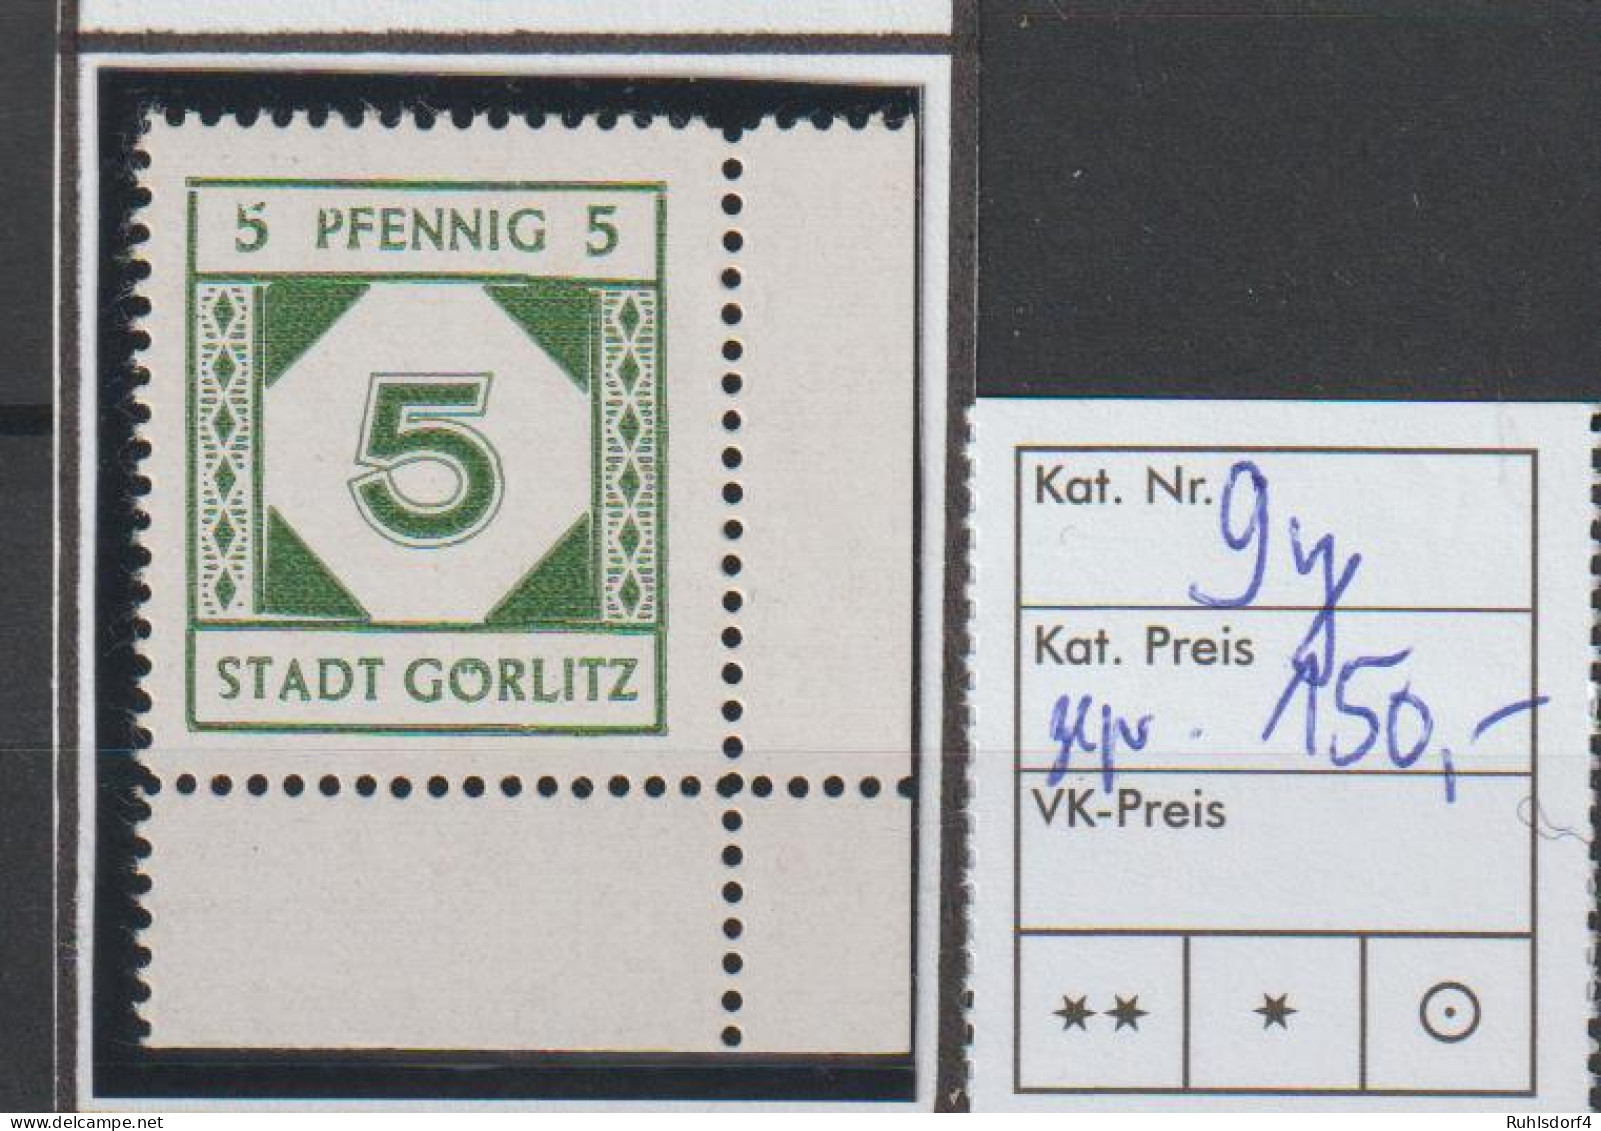 Görlitz 9y, Geprüft Kunz BPP, Eckrandstück, ** (MNH) - Mint